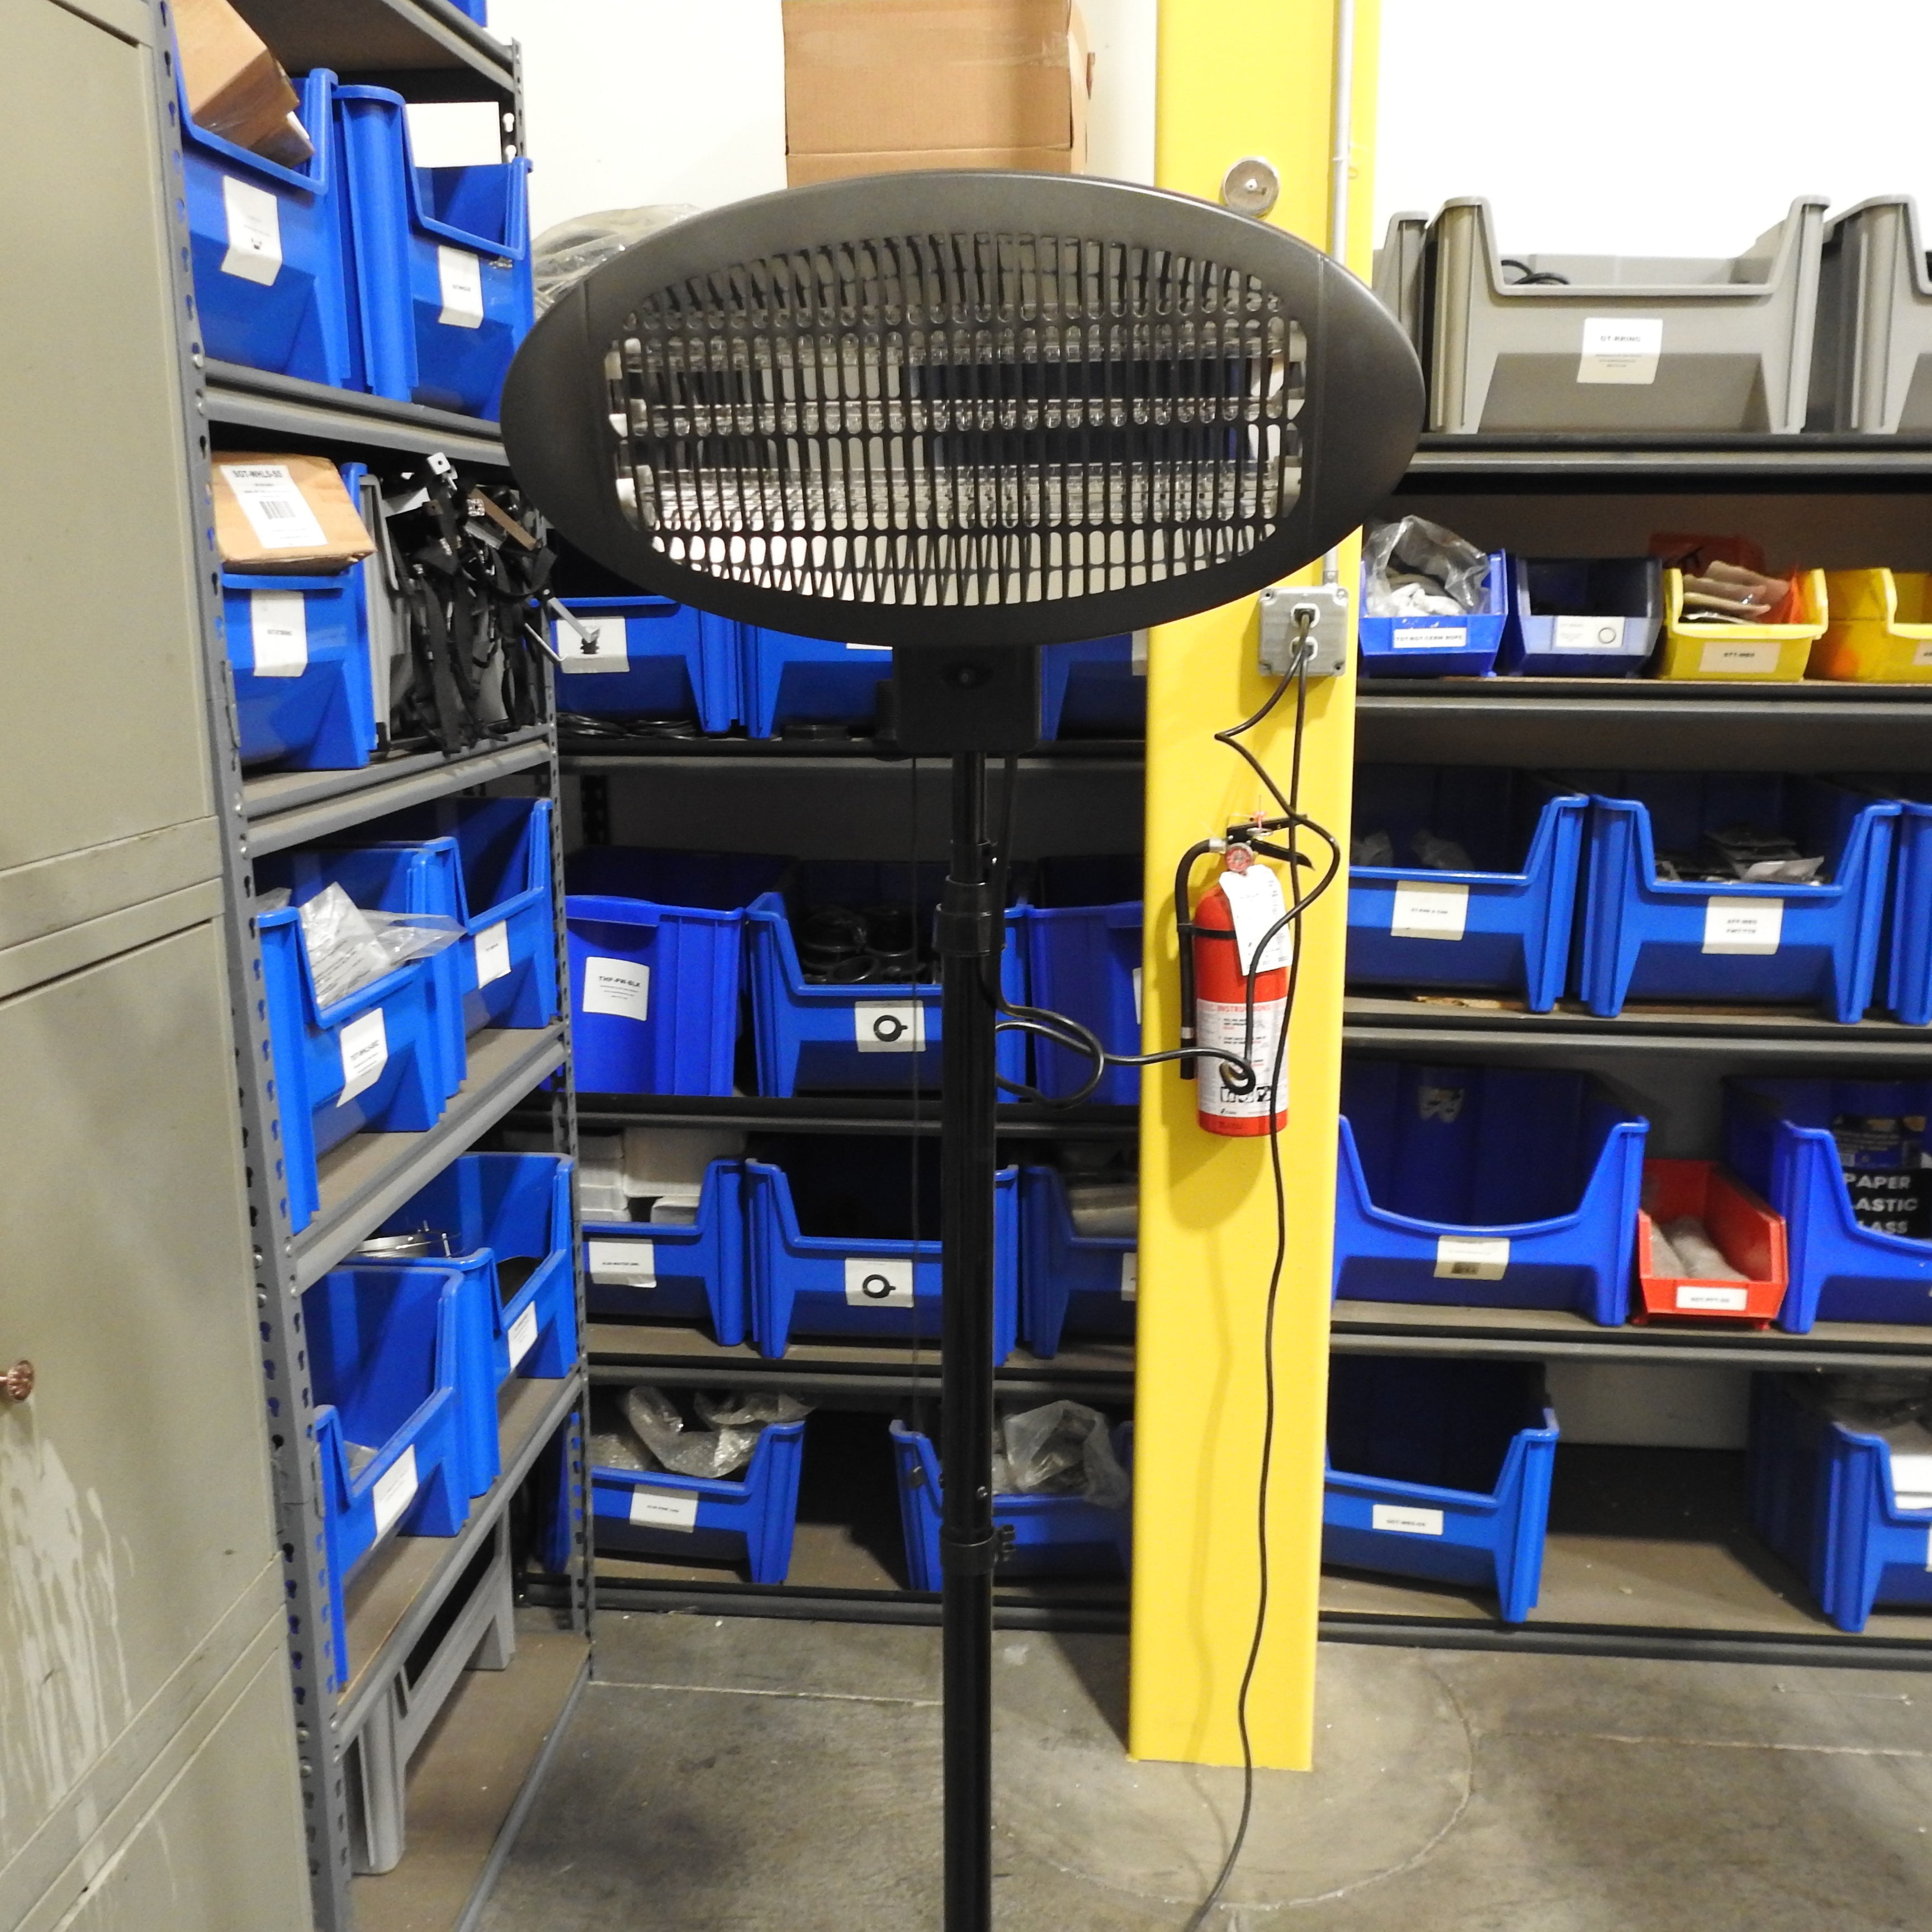 Hiland Freestanding Electric Heater in Black-HIL-1500DI- Lifestyle Heater Off